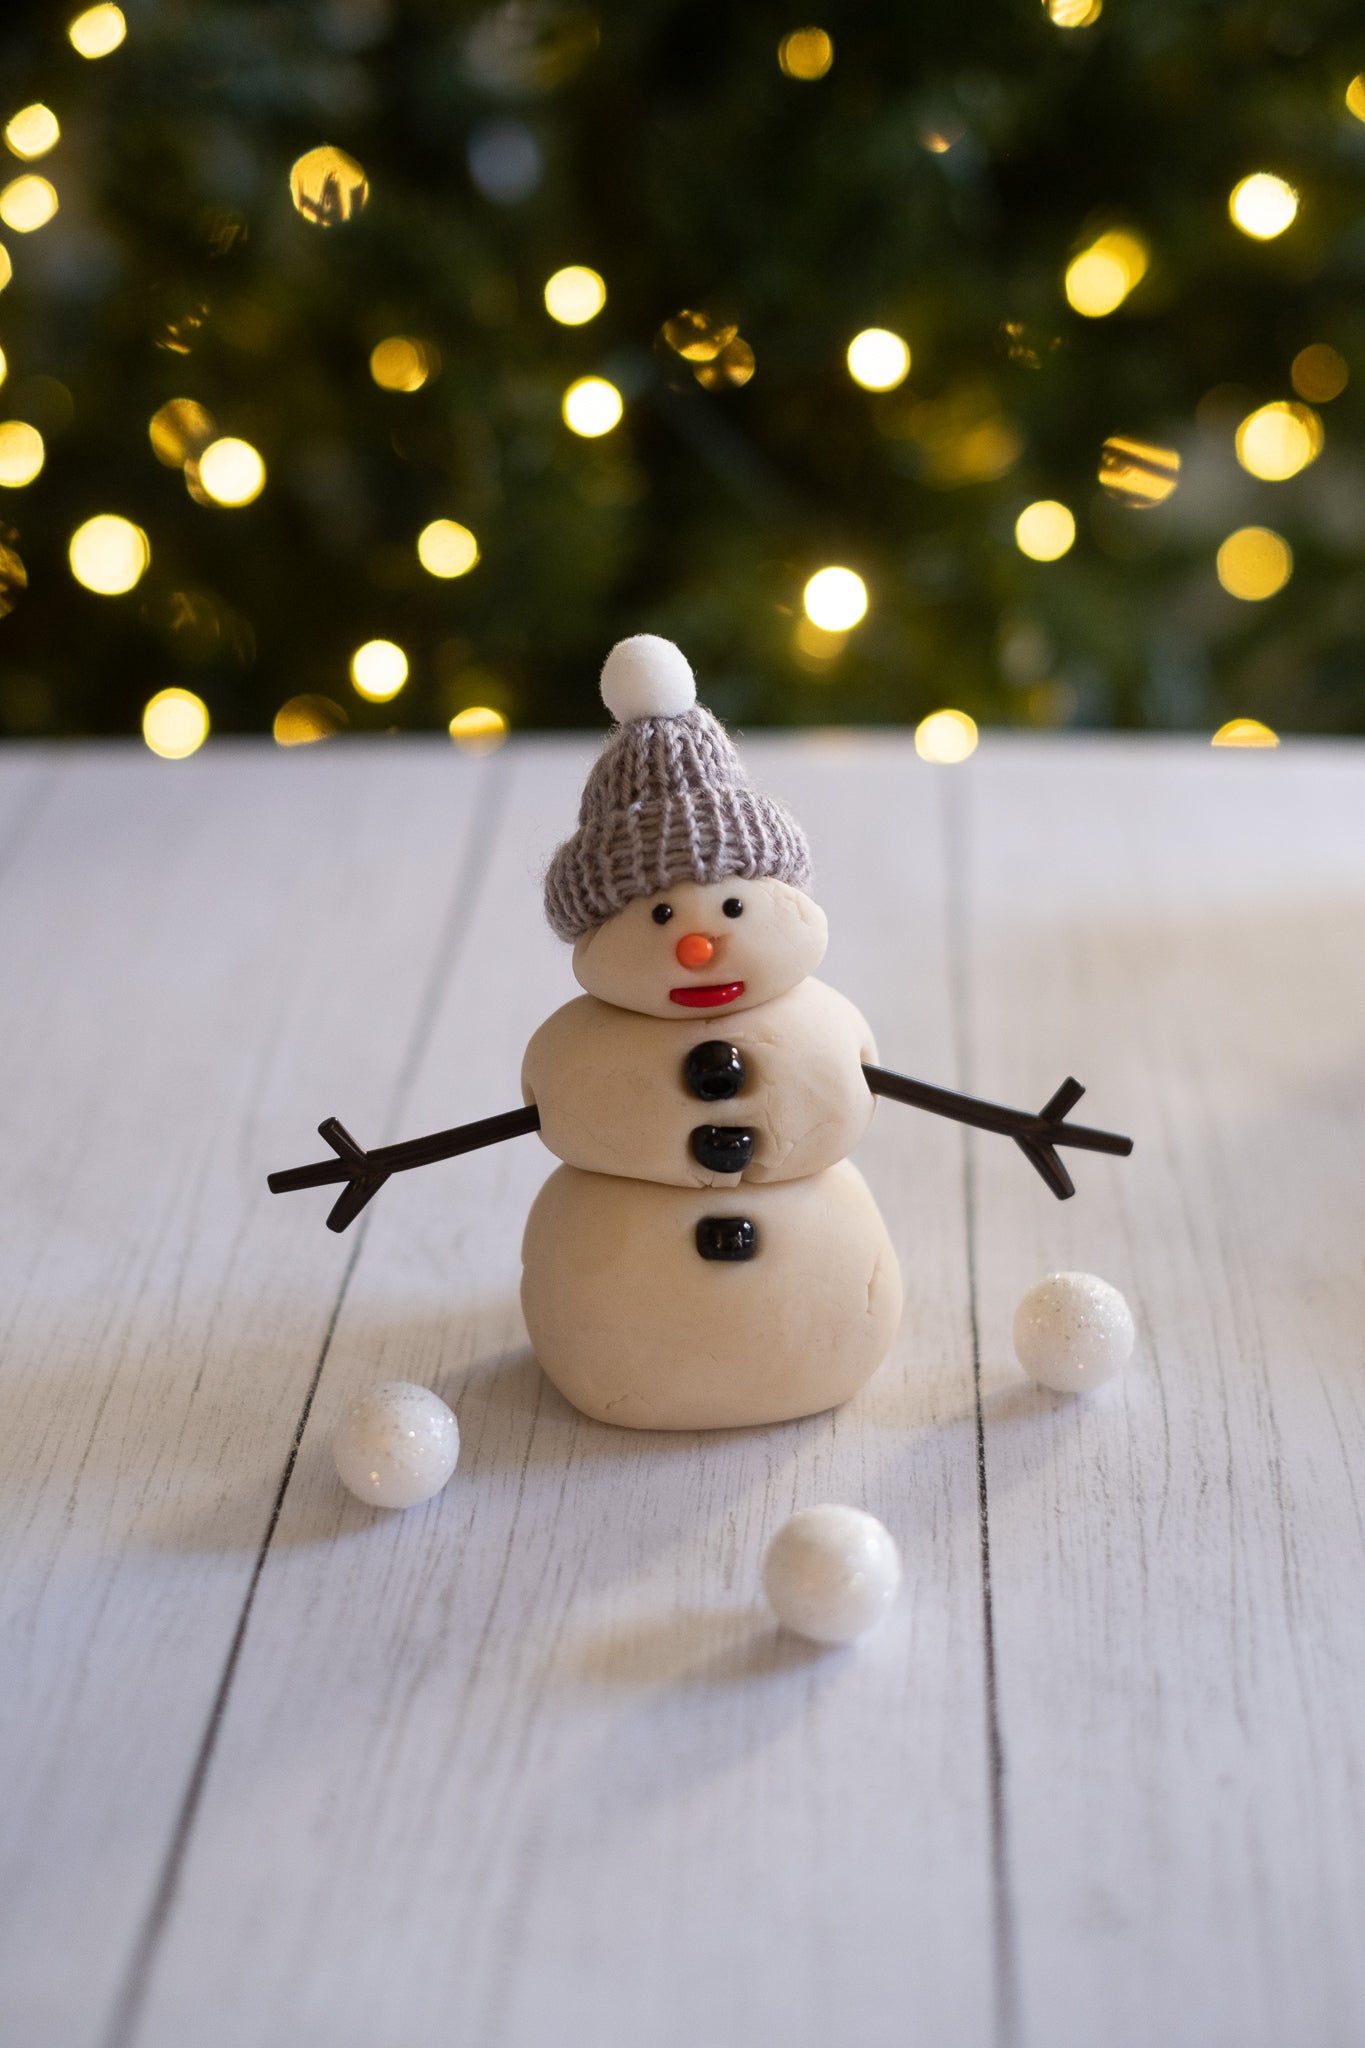 Frosty The Snowman Play Dough Kit